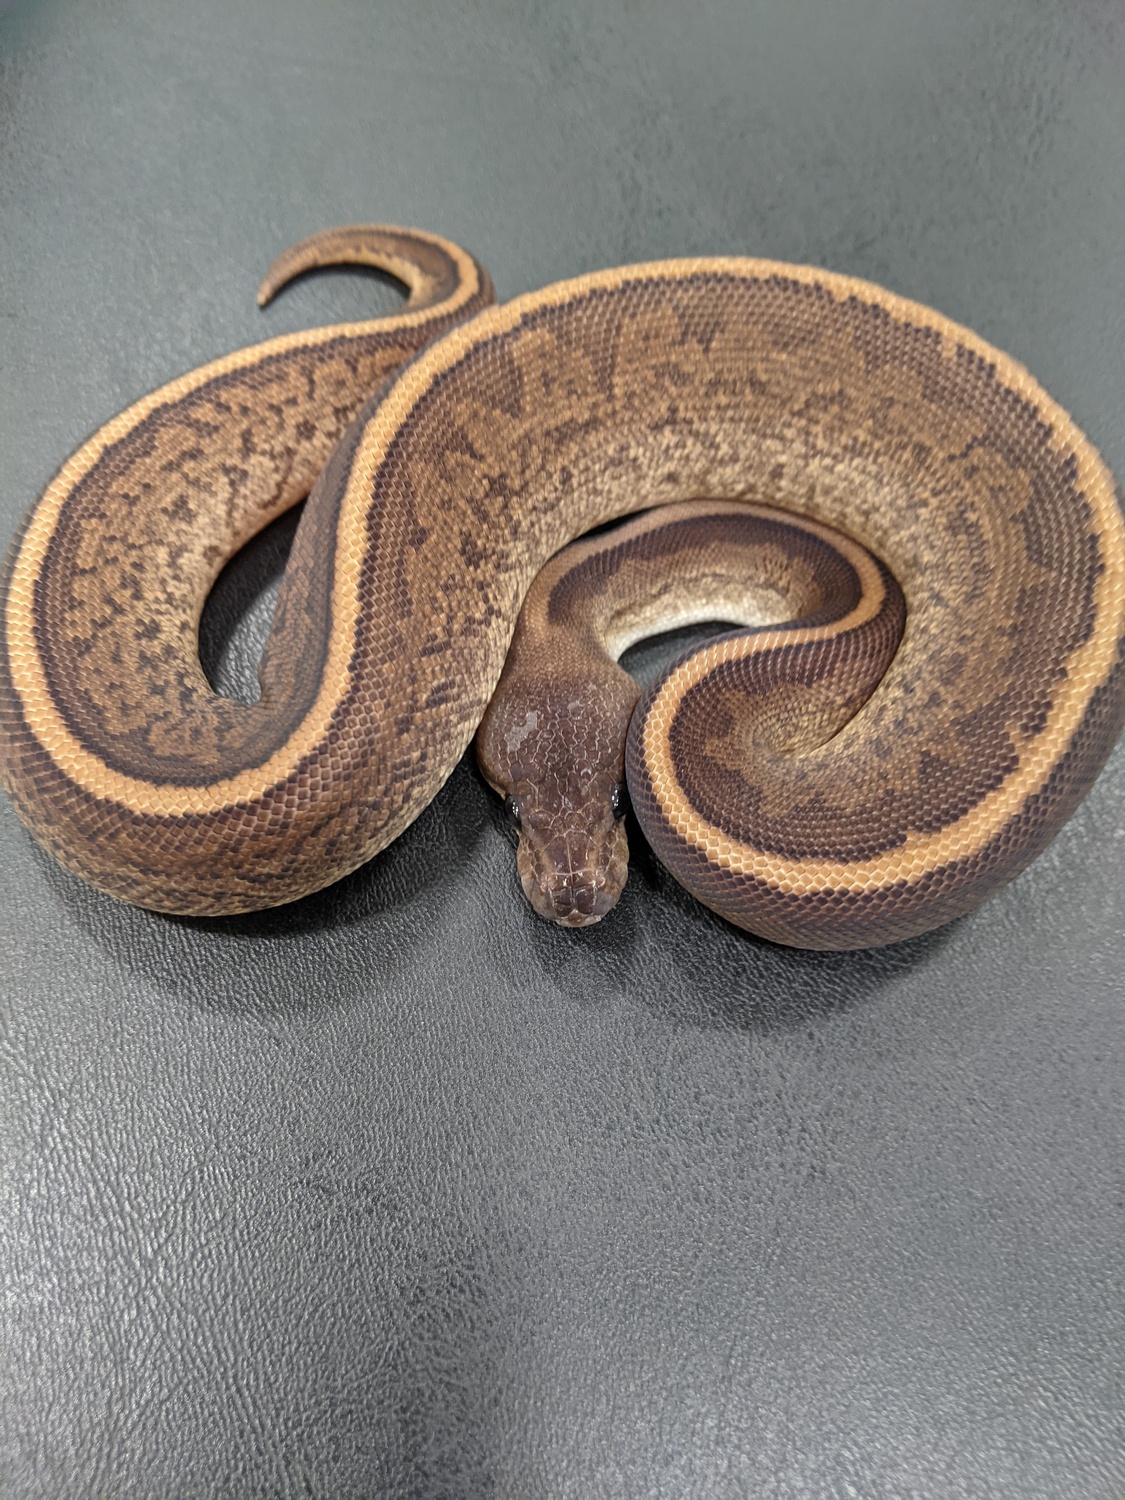 Cinnamon Mahogany Shrapnel Ball Python by Ohio Reptile & Rodent Company